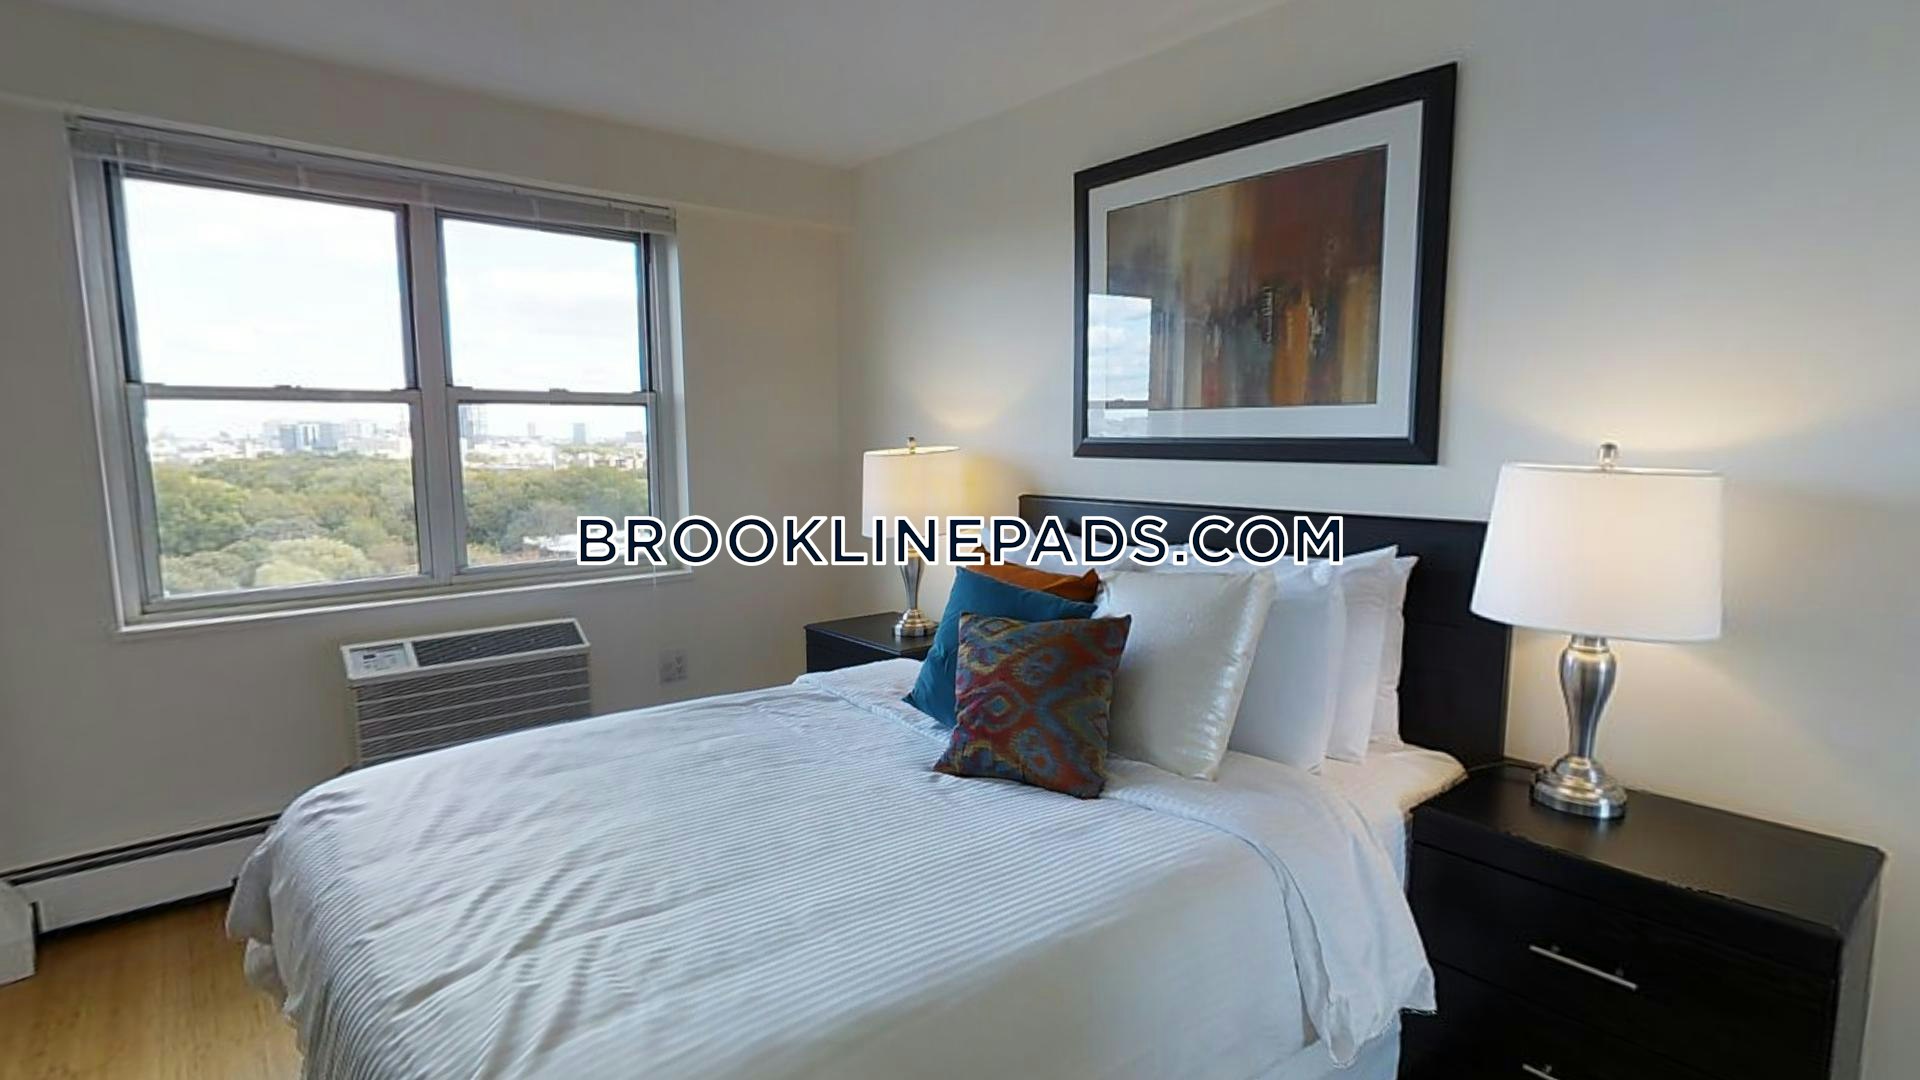 Brookline - $4,250